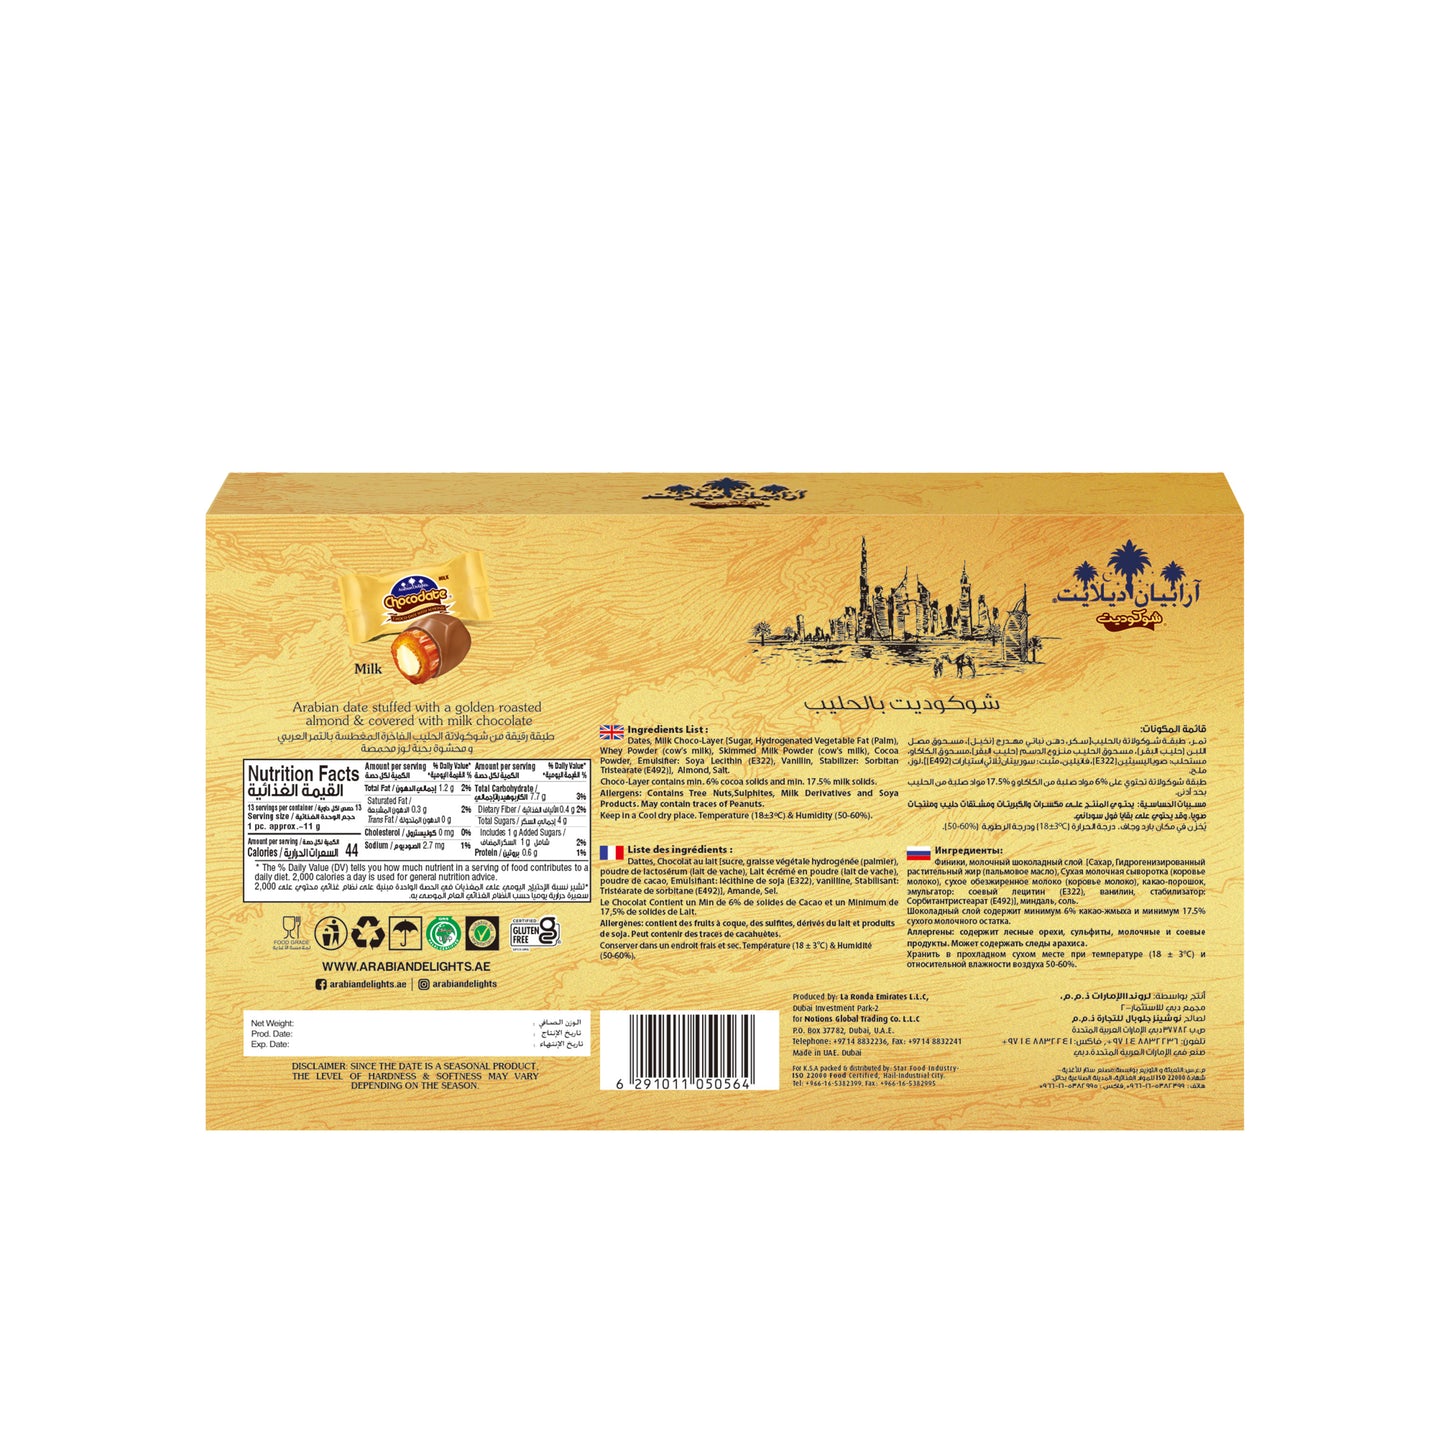 Arabian Delights Milk Chocodate, Classic Chocolate Coated Bite-Sized Snacks, Stuffed w/ Golden Roasted Almonds ,Dates| Snacks & Sweets 150g Pouch